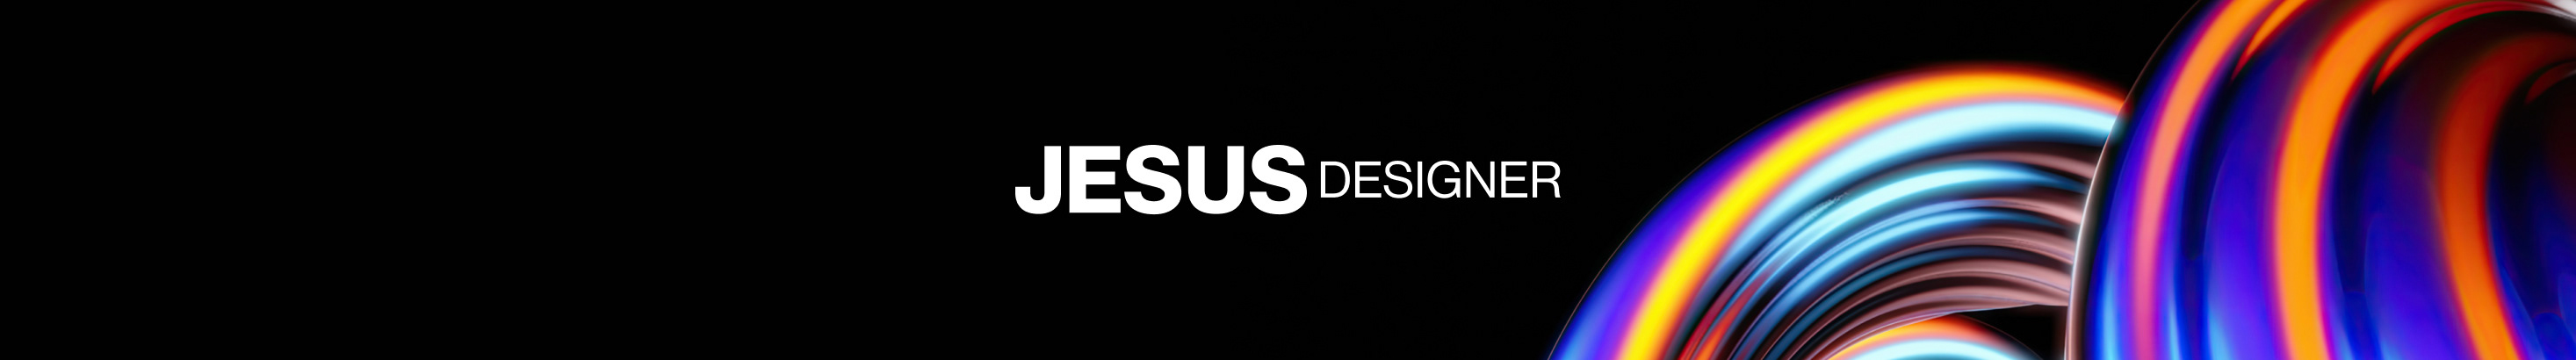 Jesus Designer's profile banner